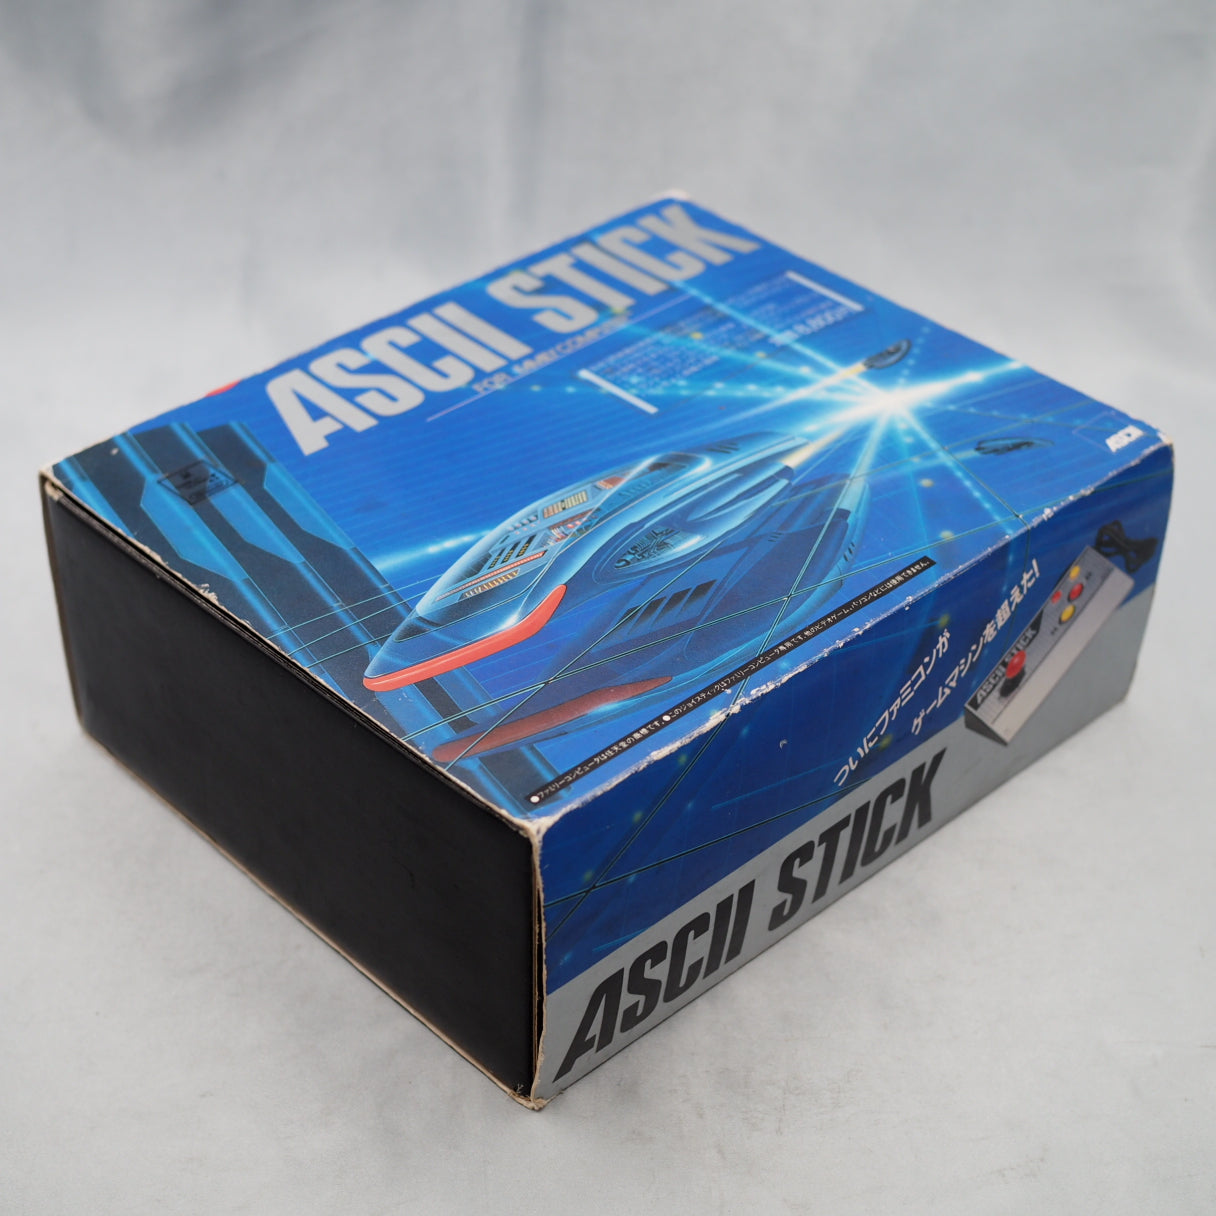 ASCII STICK Controller AS-2088-FC Boxed